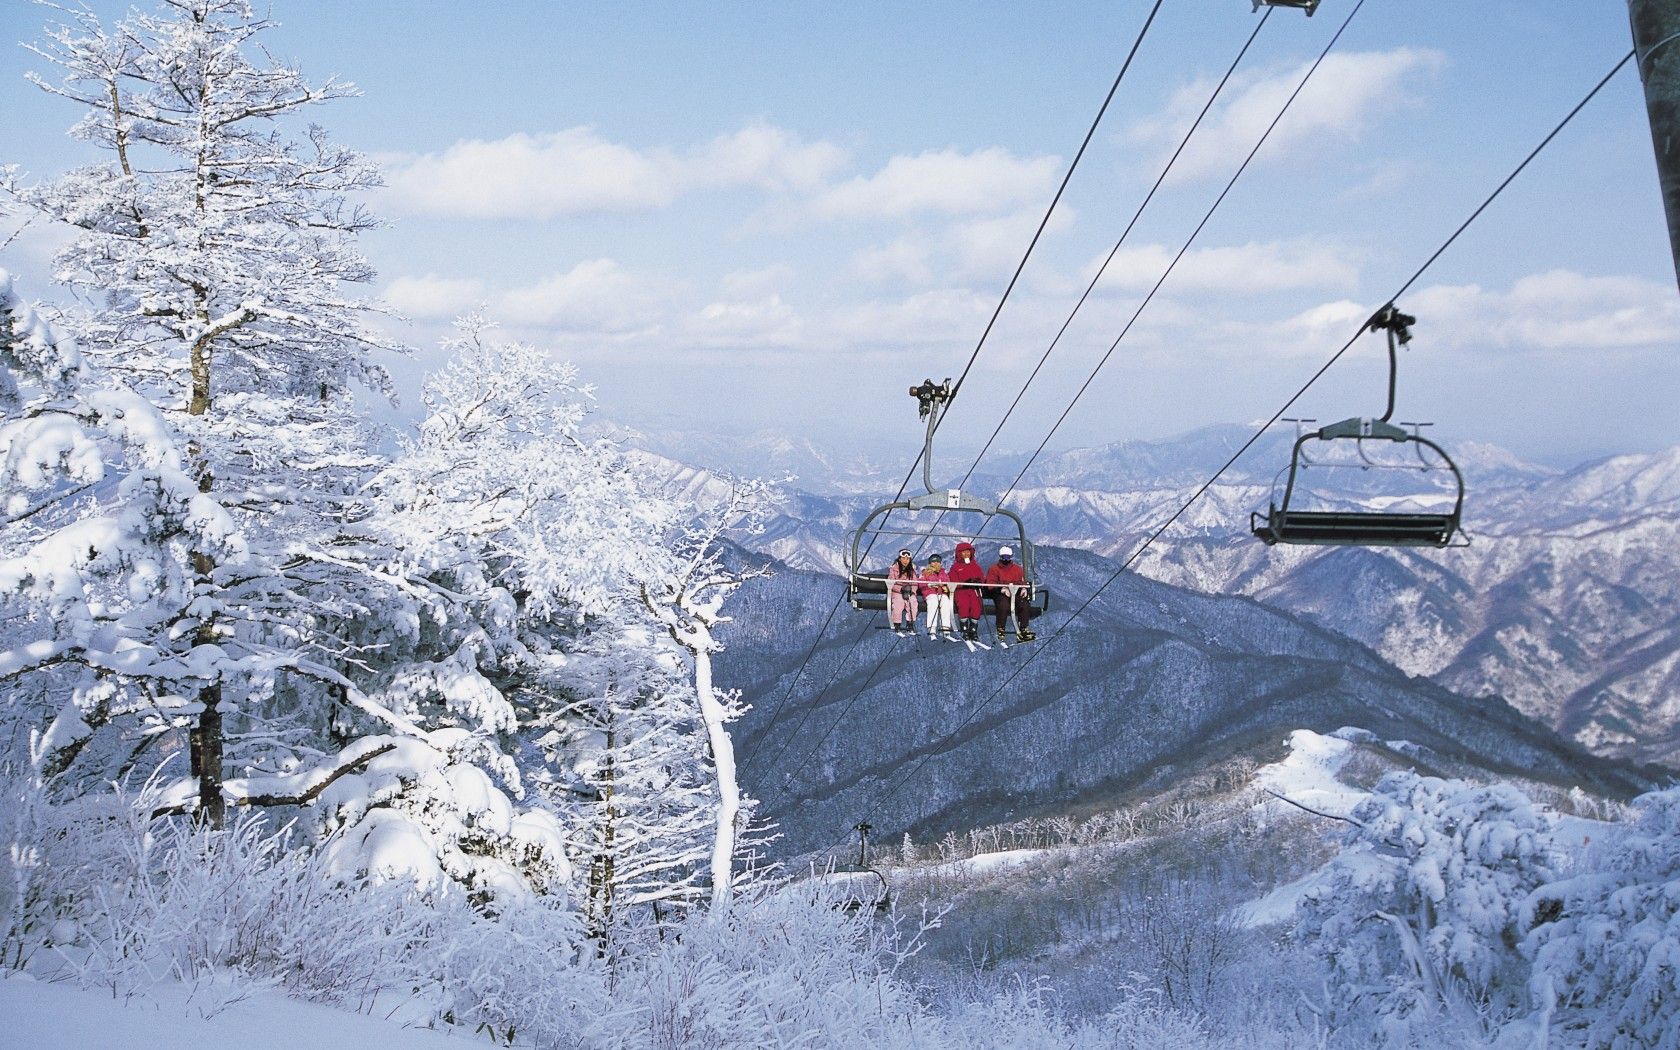 The Alps of Korea